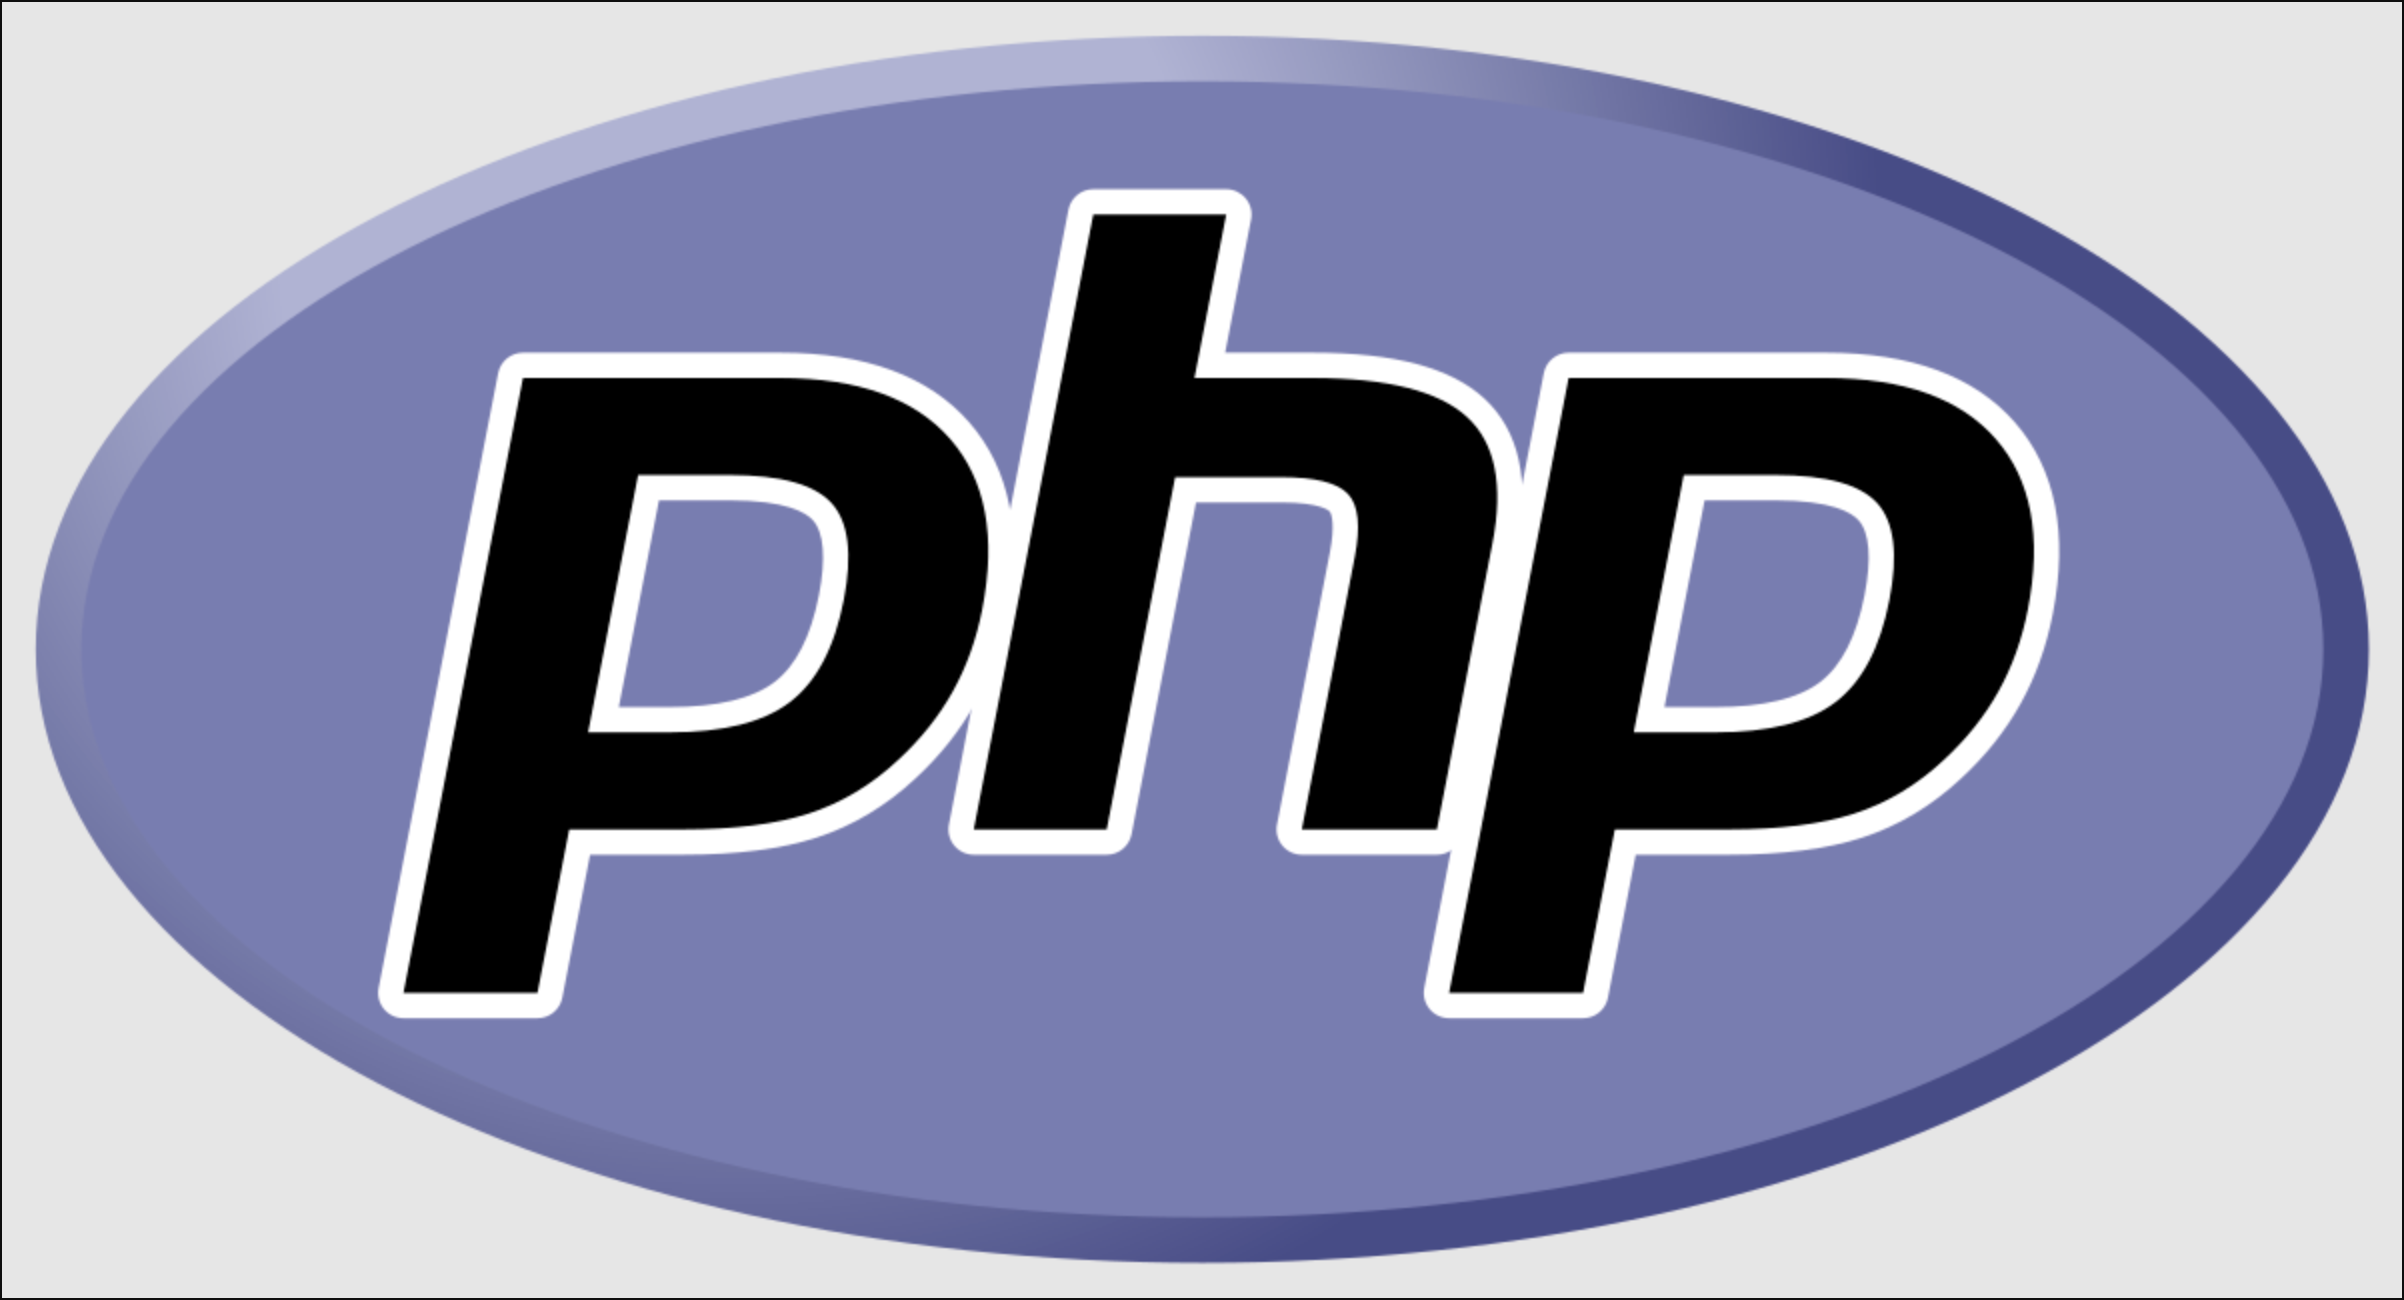 api.video announces a new PHP client